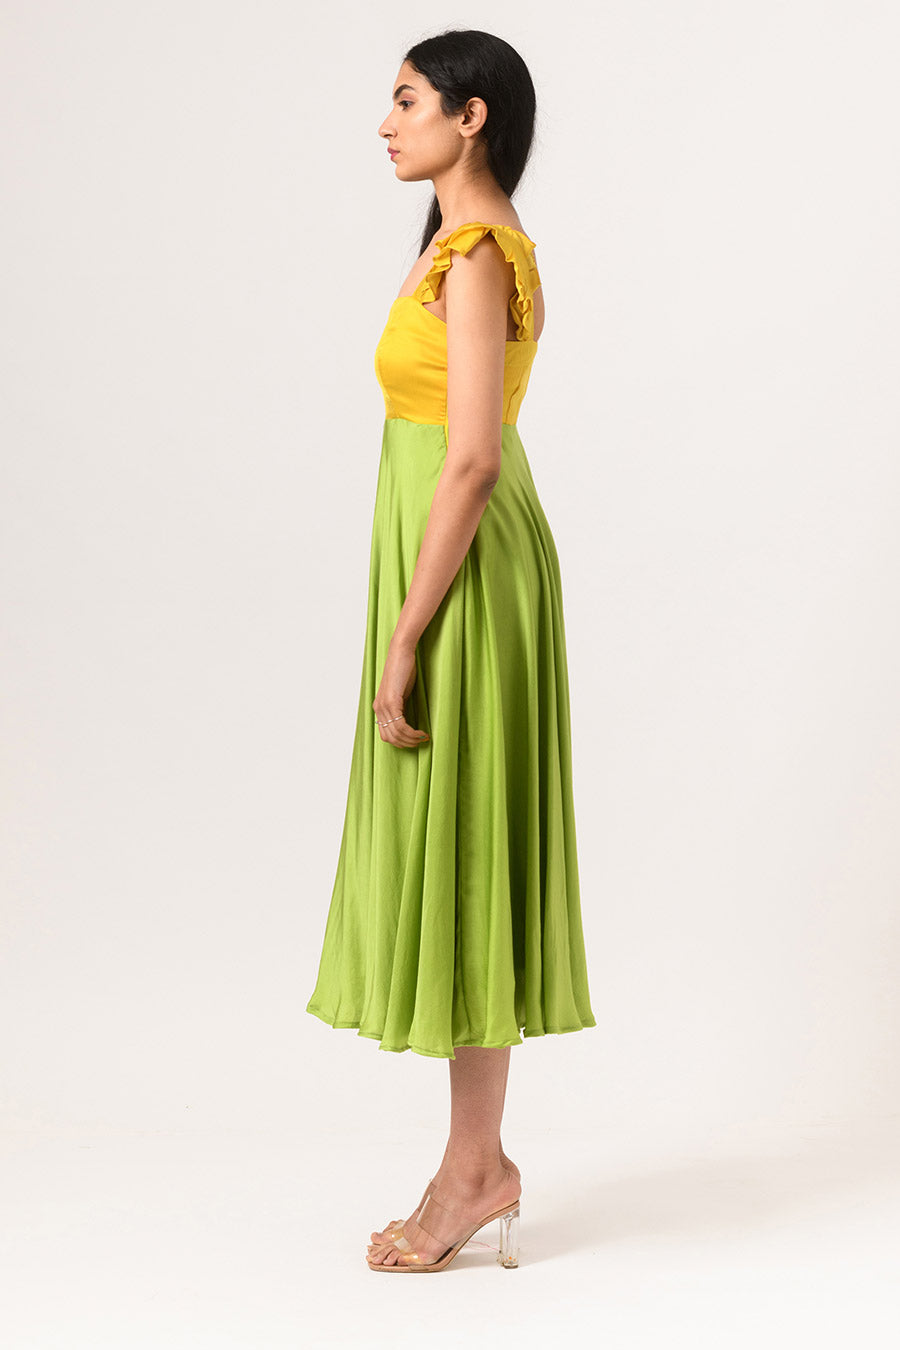 Yellow-Green Umbrella Dress